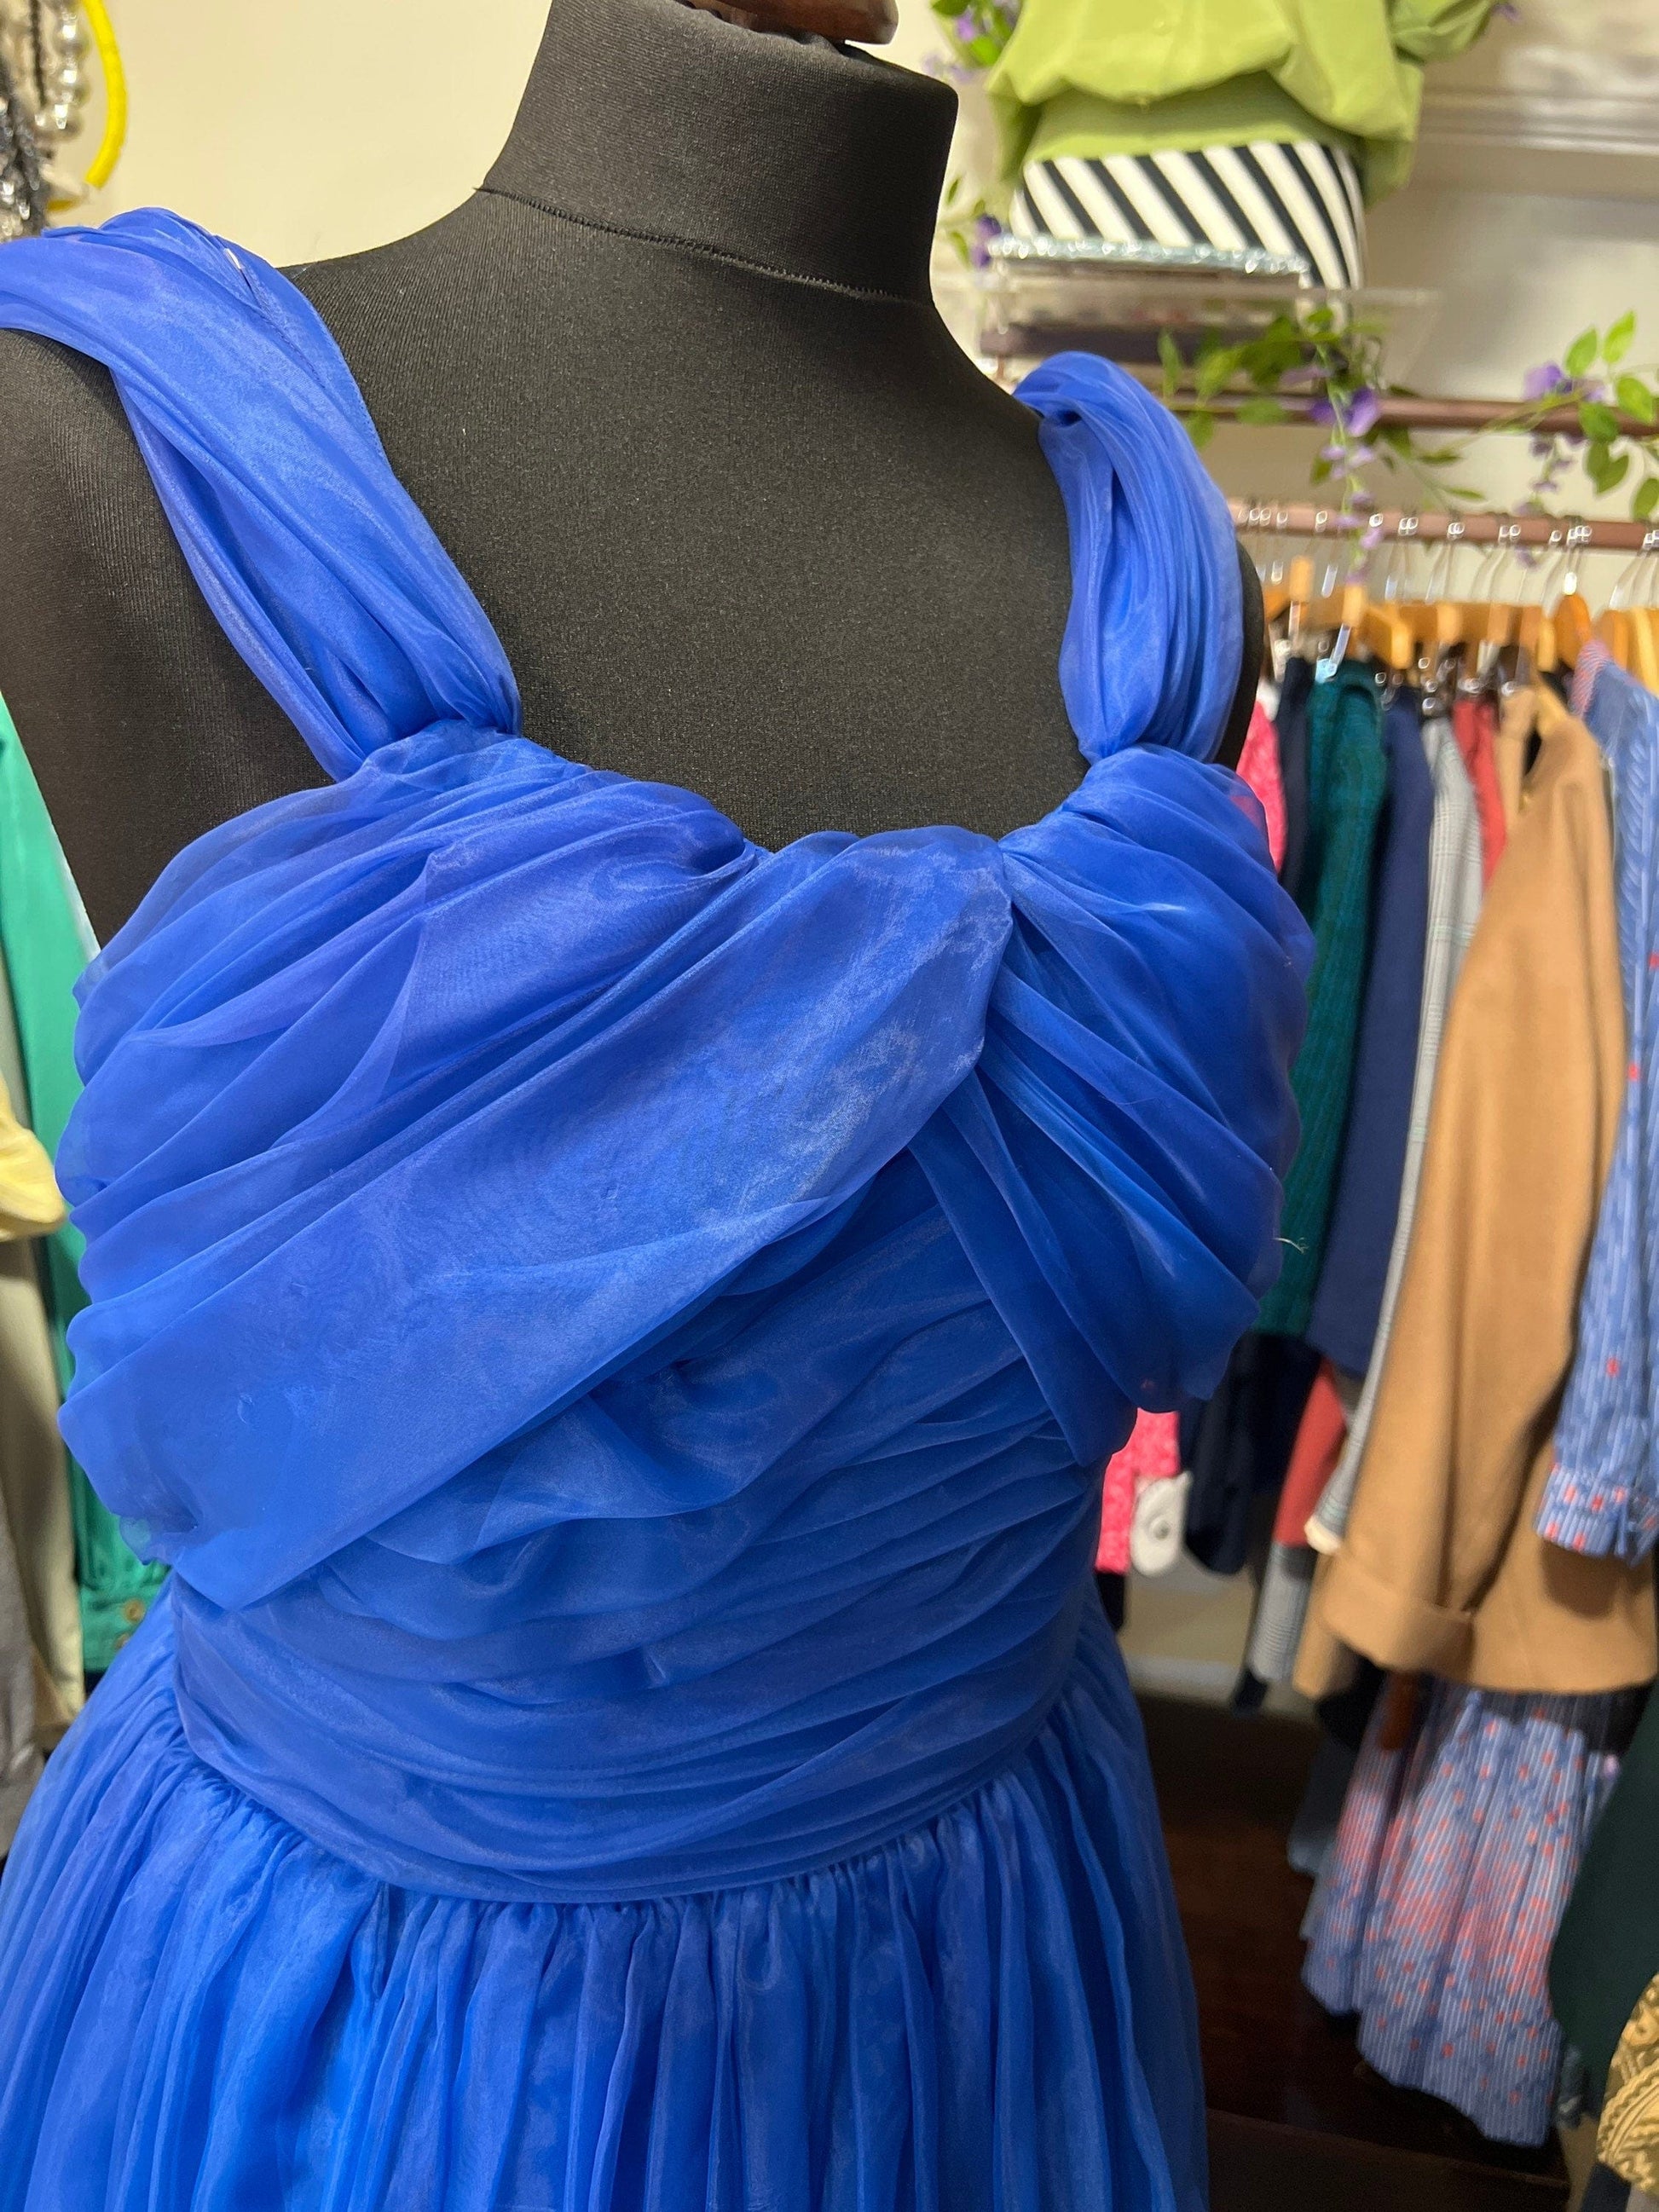 Vintage 1950s Blue Prom Dress Chiffon Overlayer Semi Sheer Skirt - Lots of volume